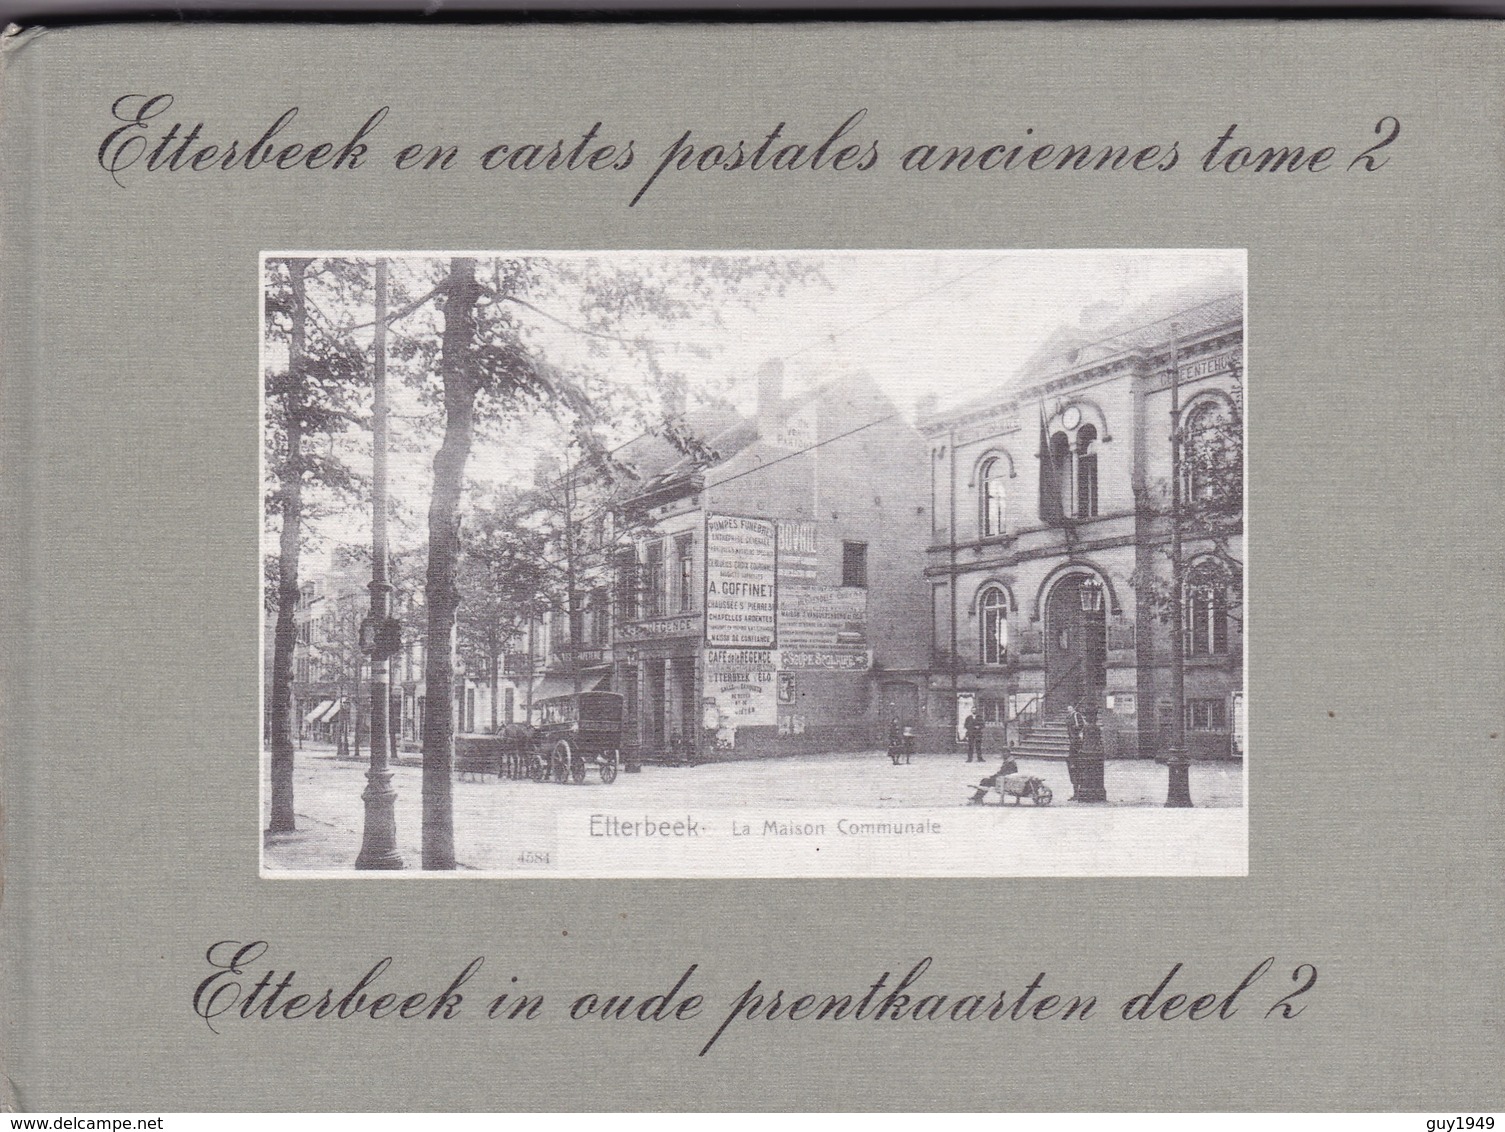 1 DRUK OUDE PRENTKAARTEN/CARTES ANCIENNES DE ETTERBEEK PREMIERE EDITION - Etterbeek